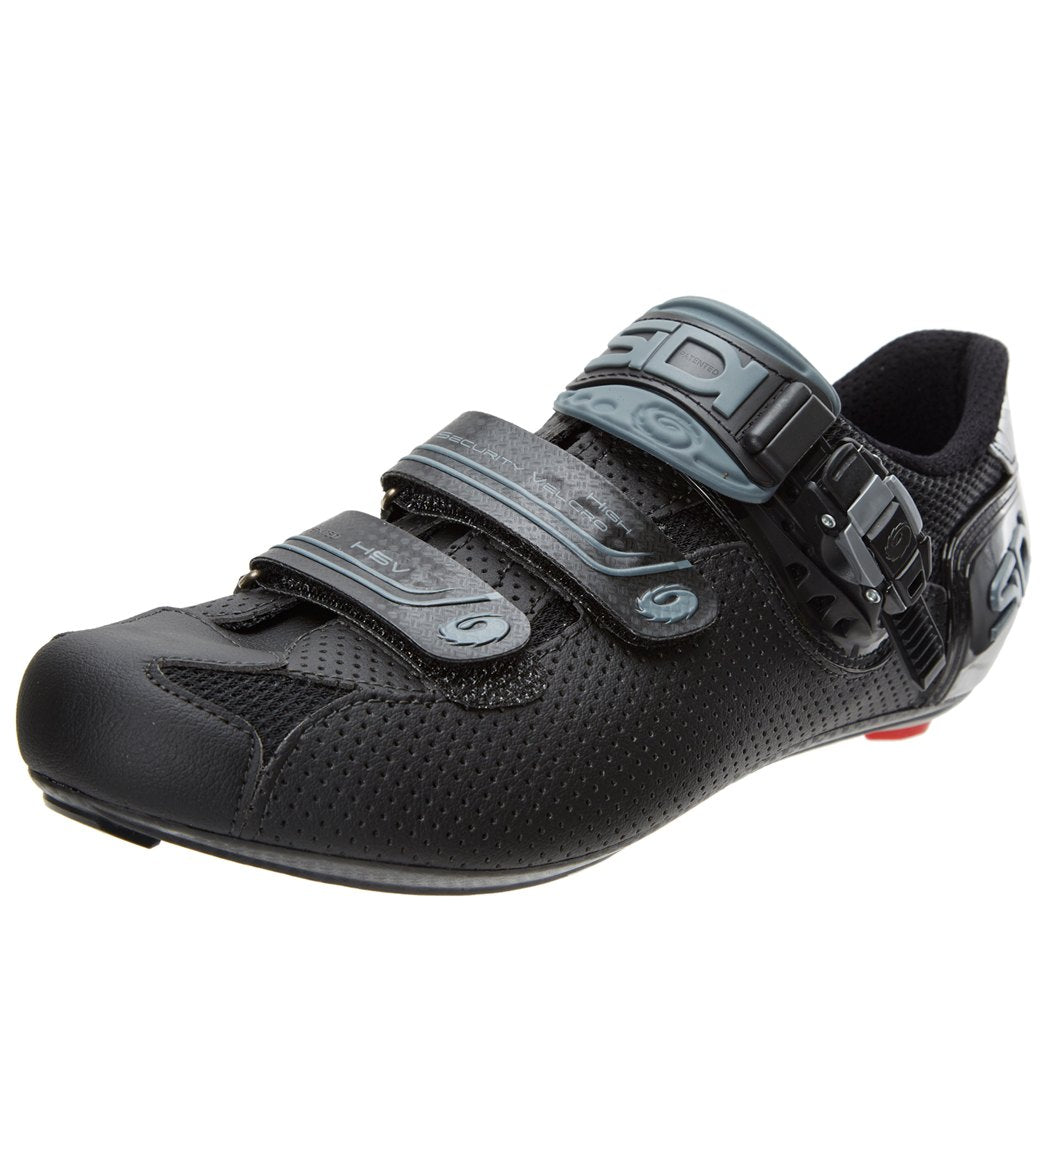 Sidi Men's Genius 7 Air Carbon Cycling Shoe - Shadow Black 46.5 - Swimoutlet.com